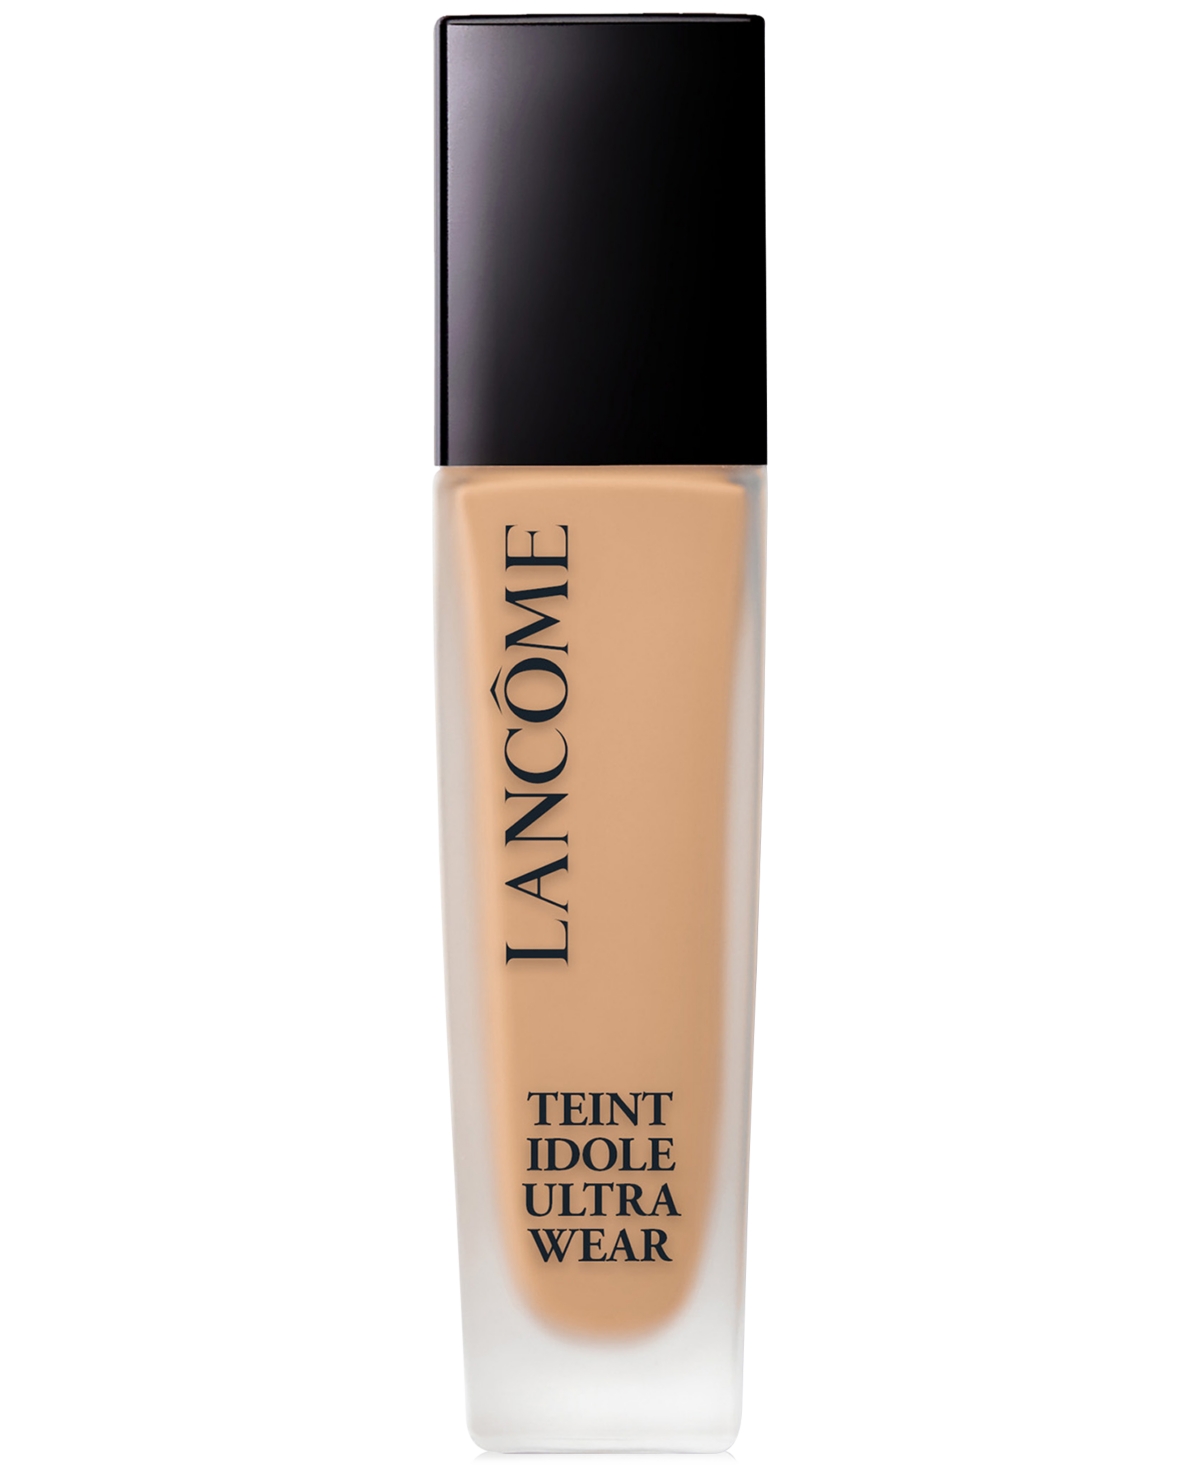 Lancôme Teint Idole Ultra Wear Foundation In W - Light To Medium Olive Skin With Warm